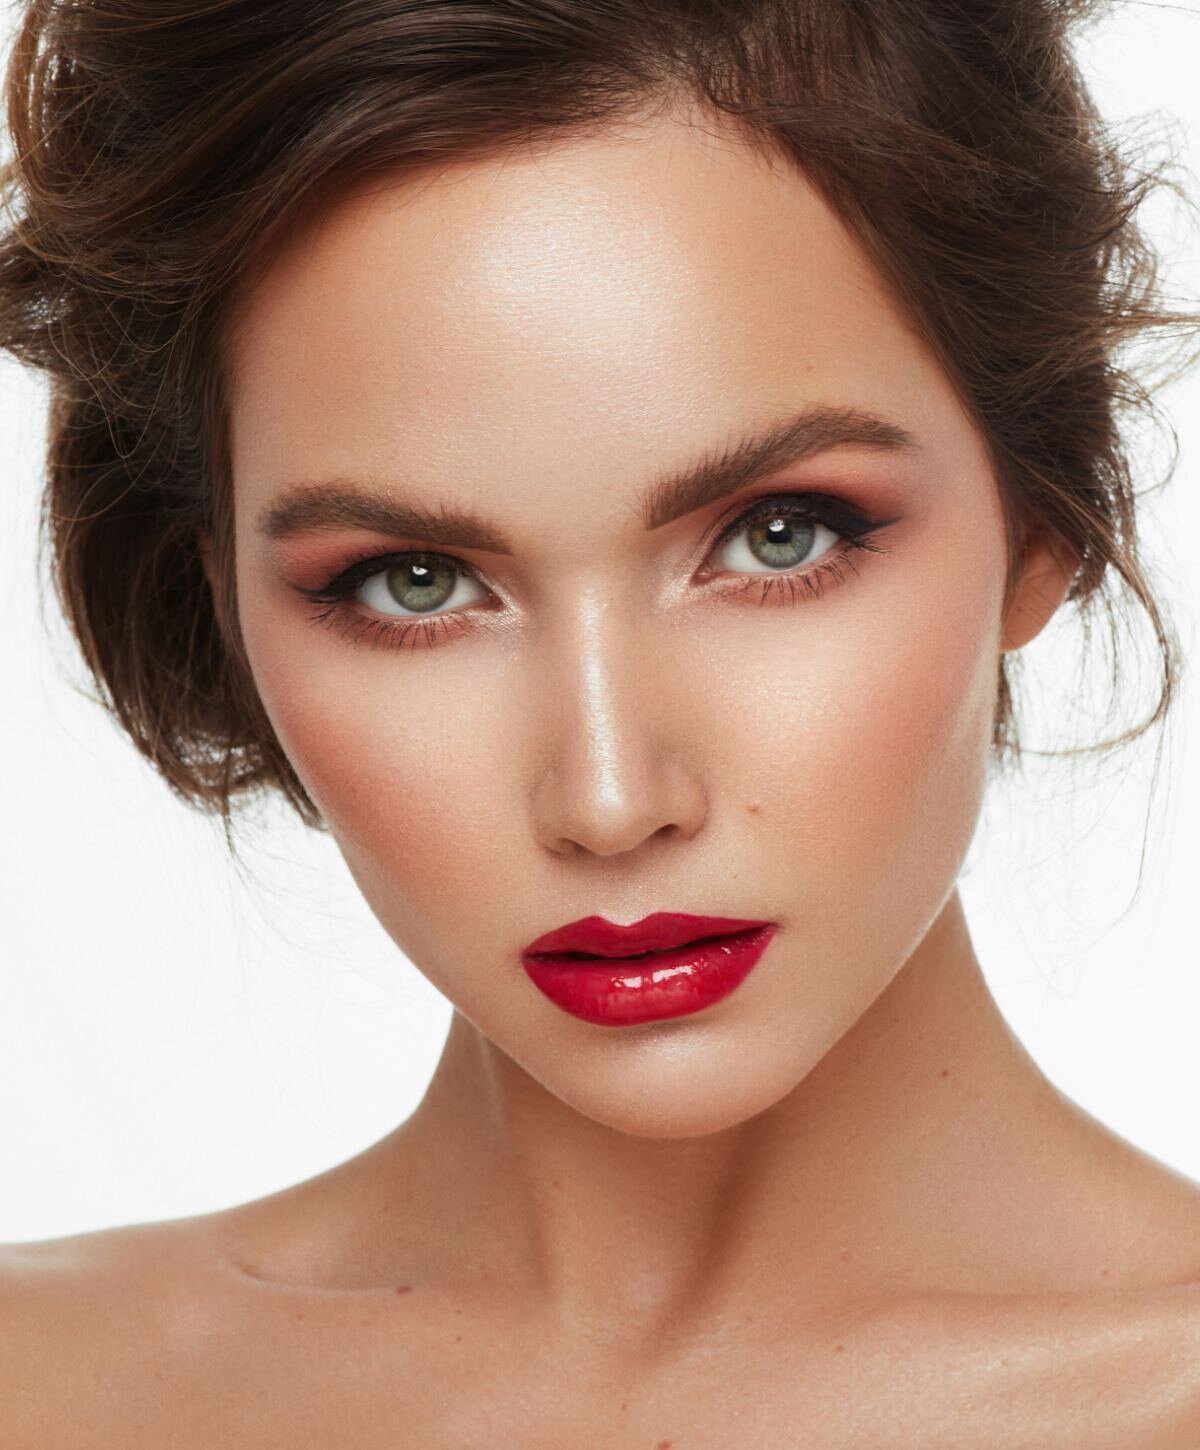 Miami female rhinoplasty model with red lipstick